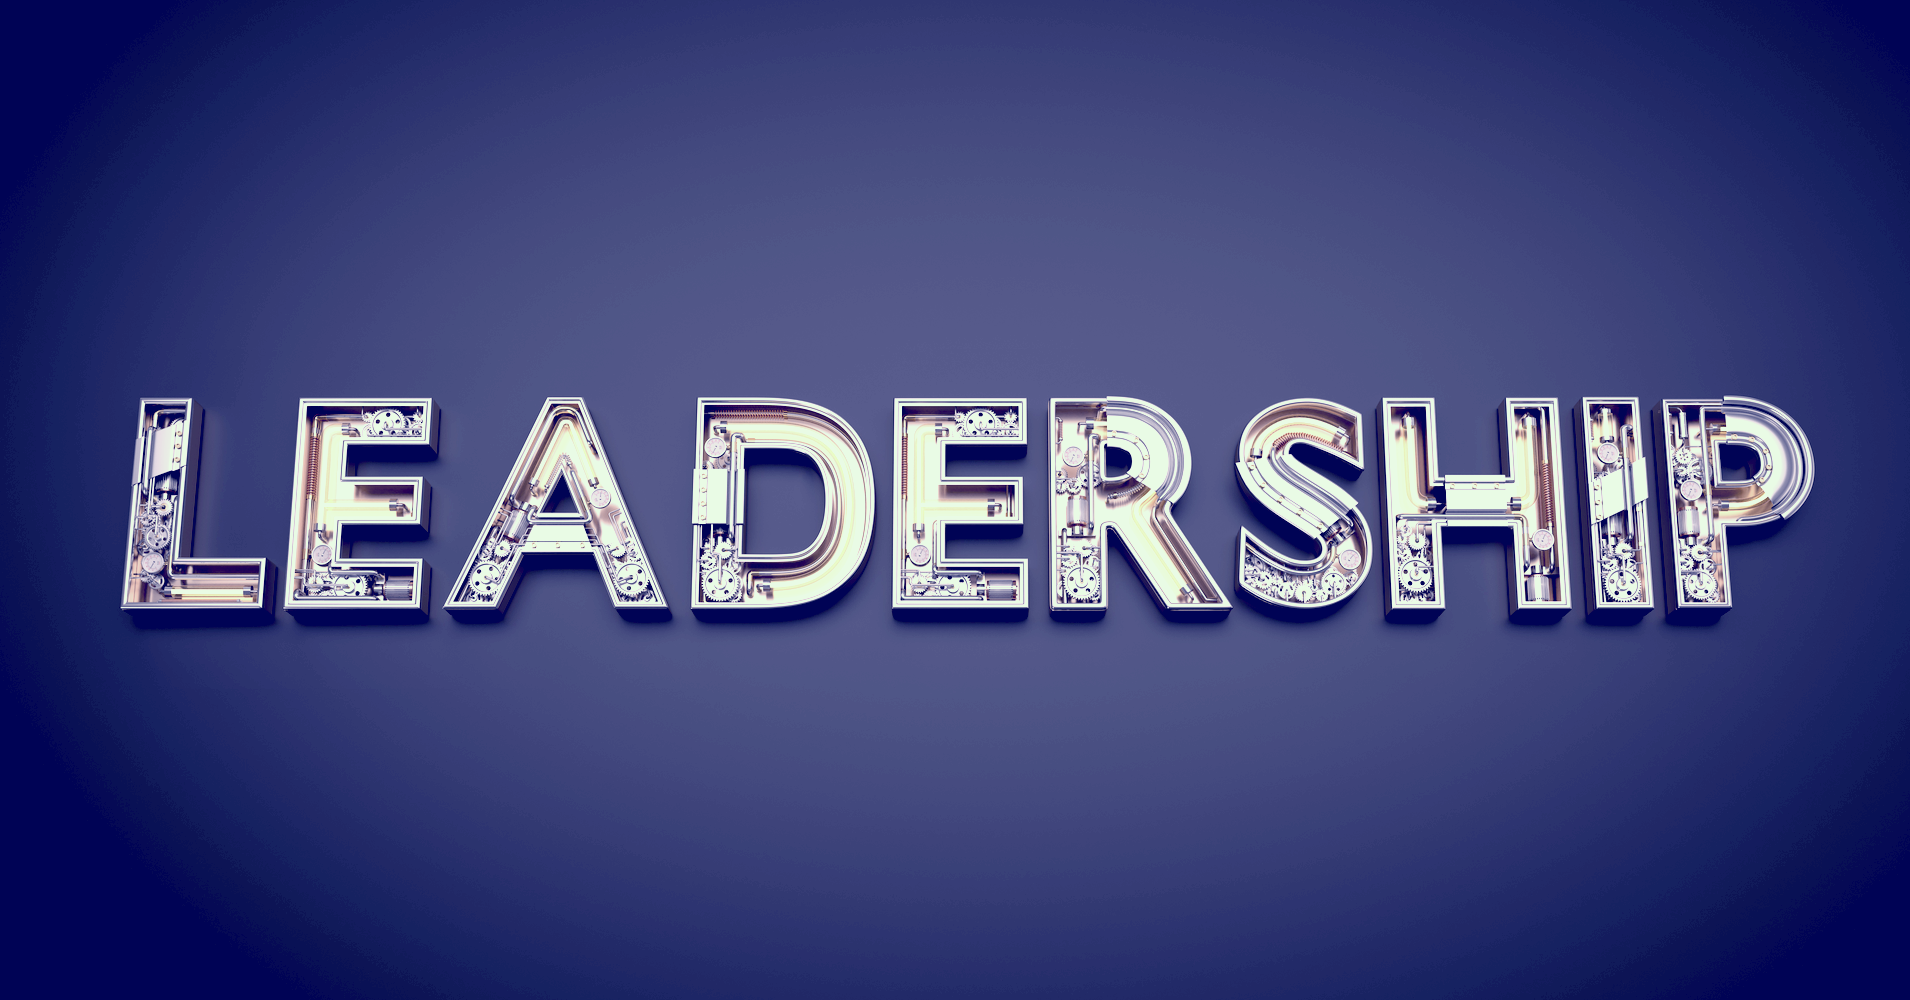 What Is My Leadership Style? - Quiz - Quizony.com